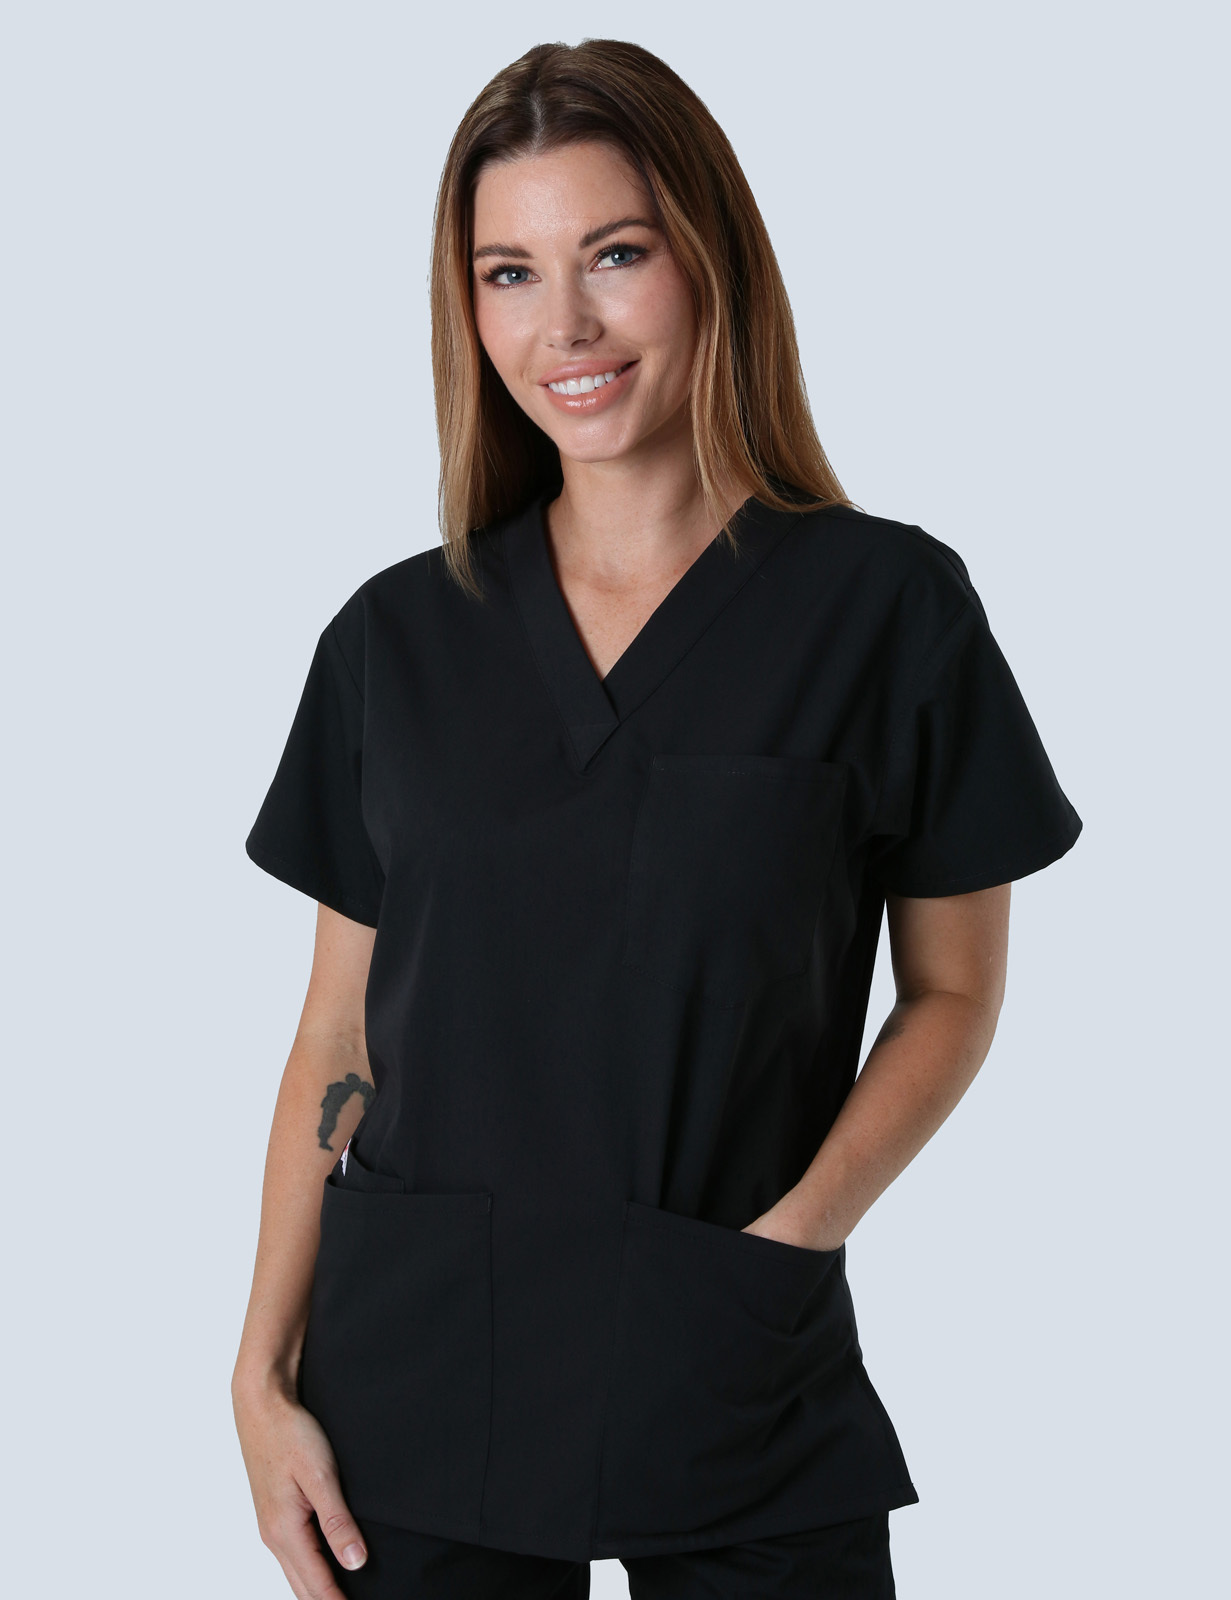 Queensland Children's Hospital Emergency Department Clinical Nurse  Uniform Top Bundle  (4 Pocket Top in Black  incl Logos)